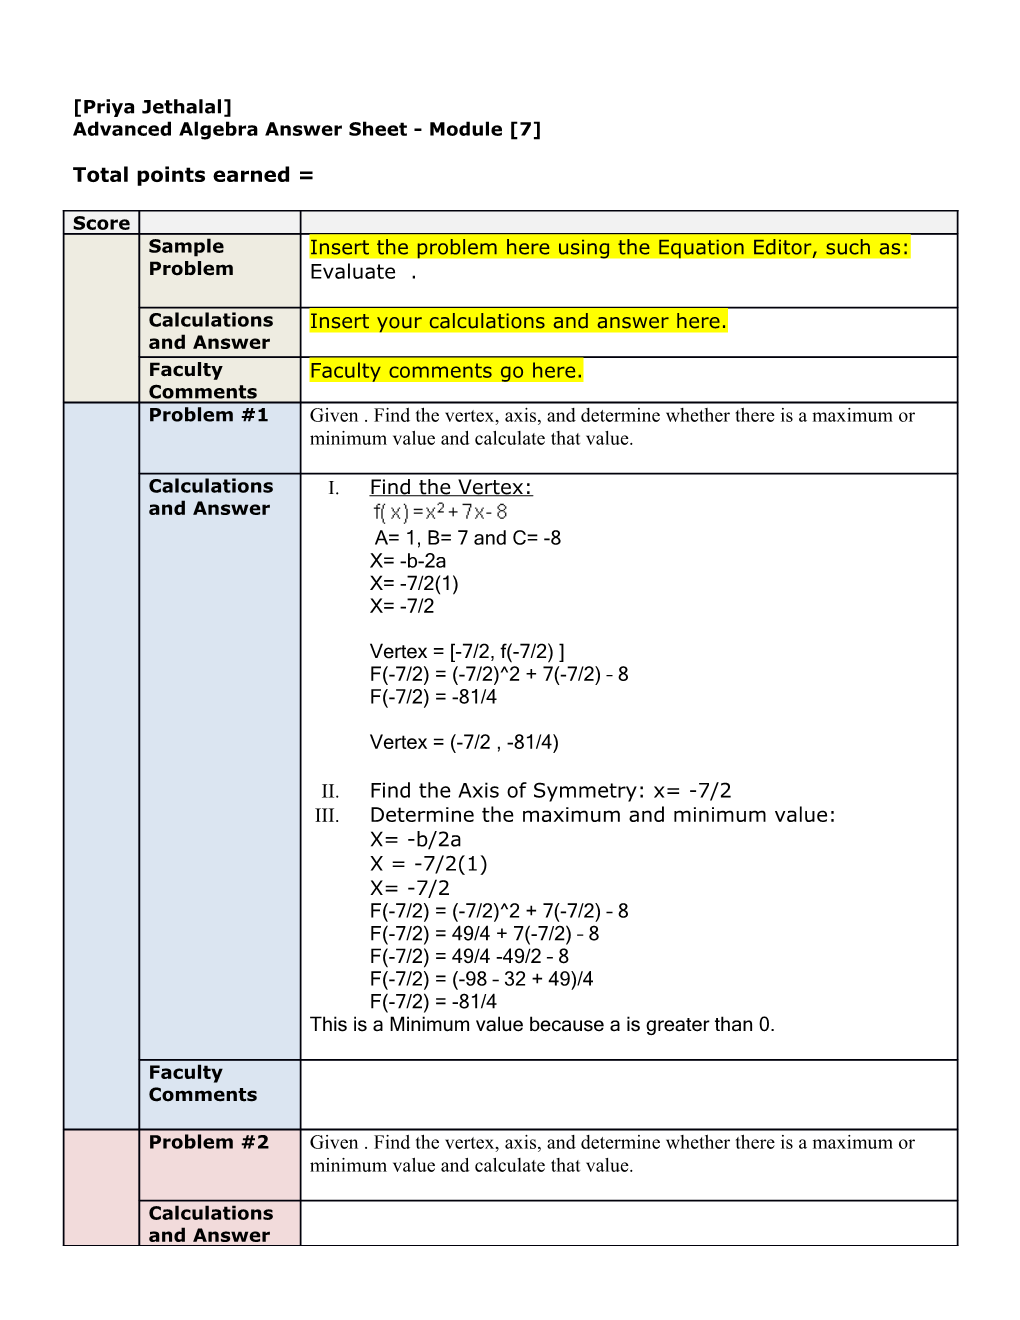 Advanced Algebra Answer Sheet - Module 7